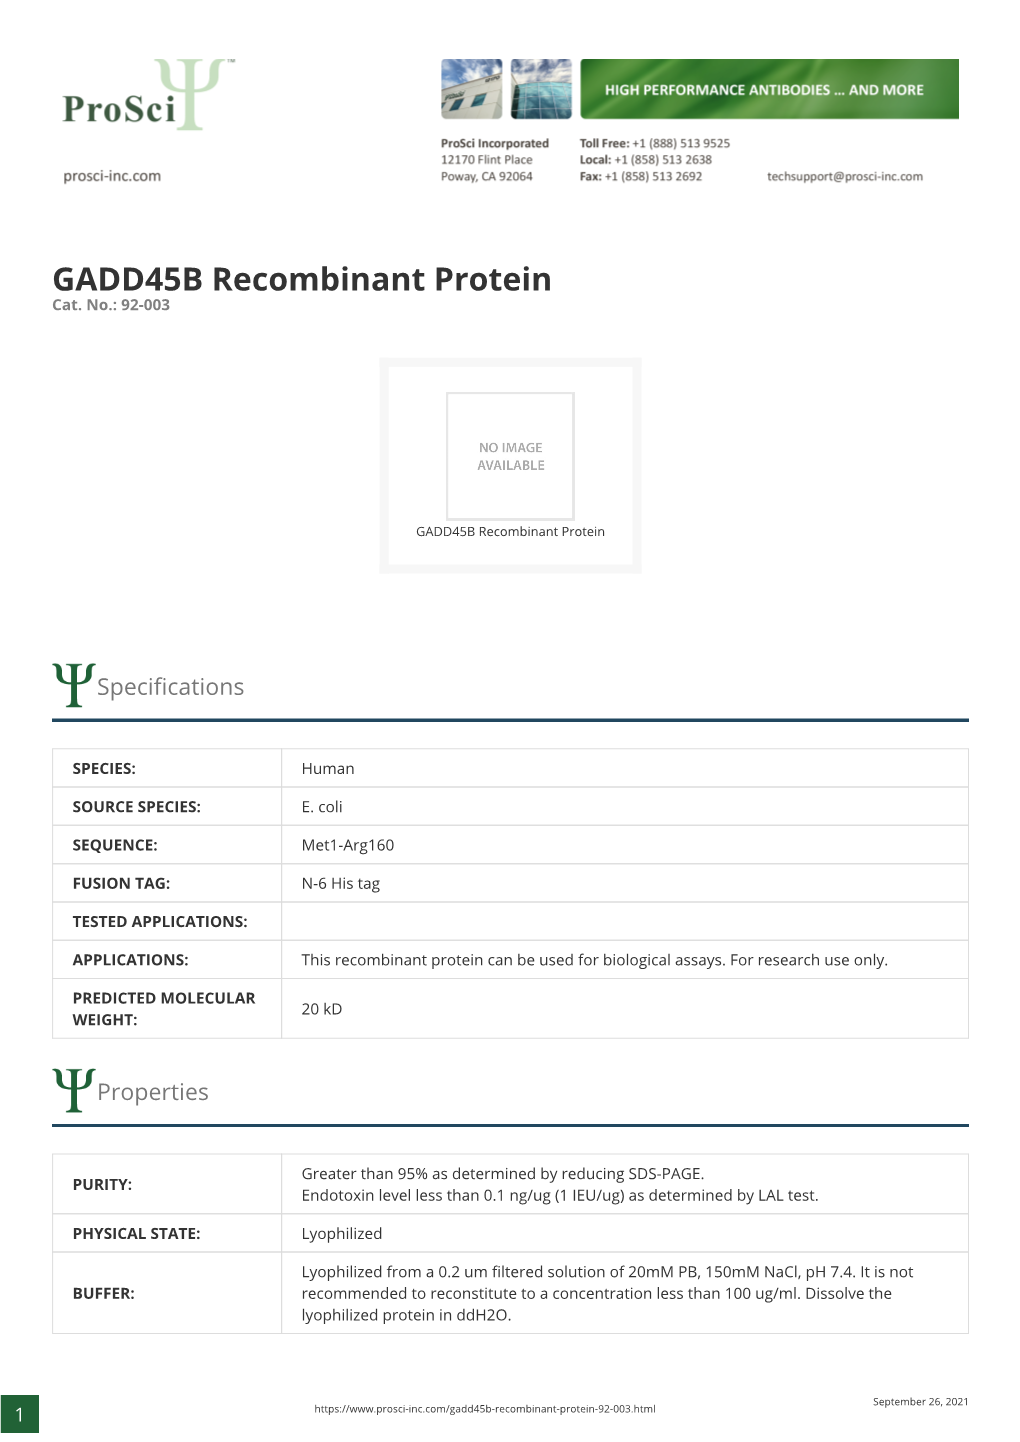 GADD45B Recombinant Protein Cat